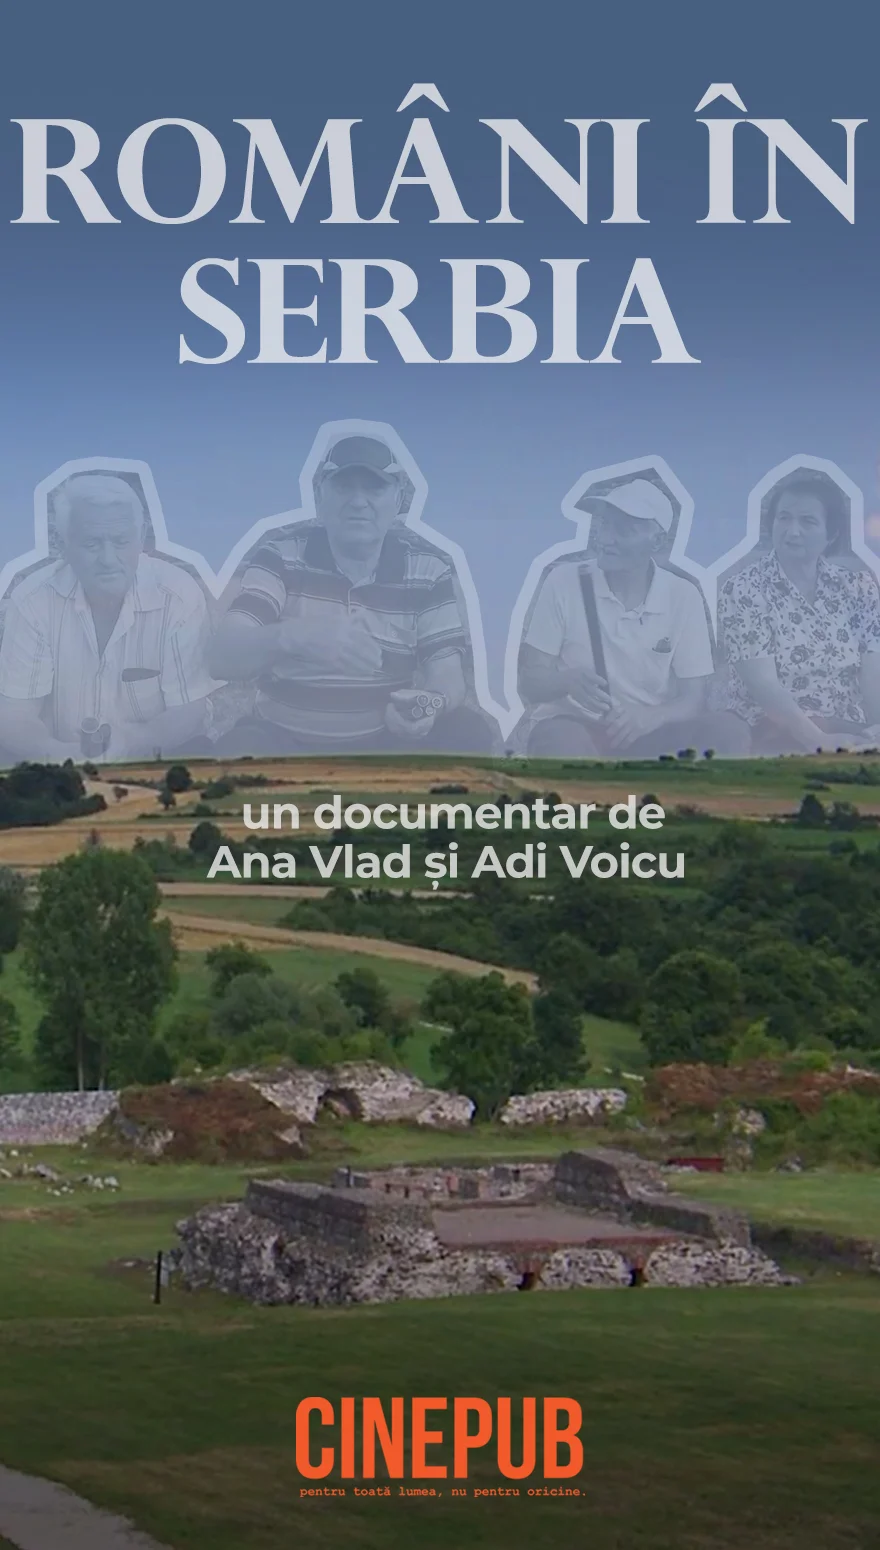 Romani-in-Serbia documentar online pe CINEPUB